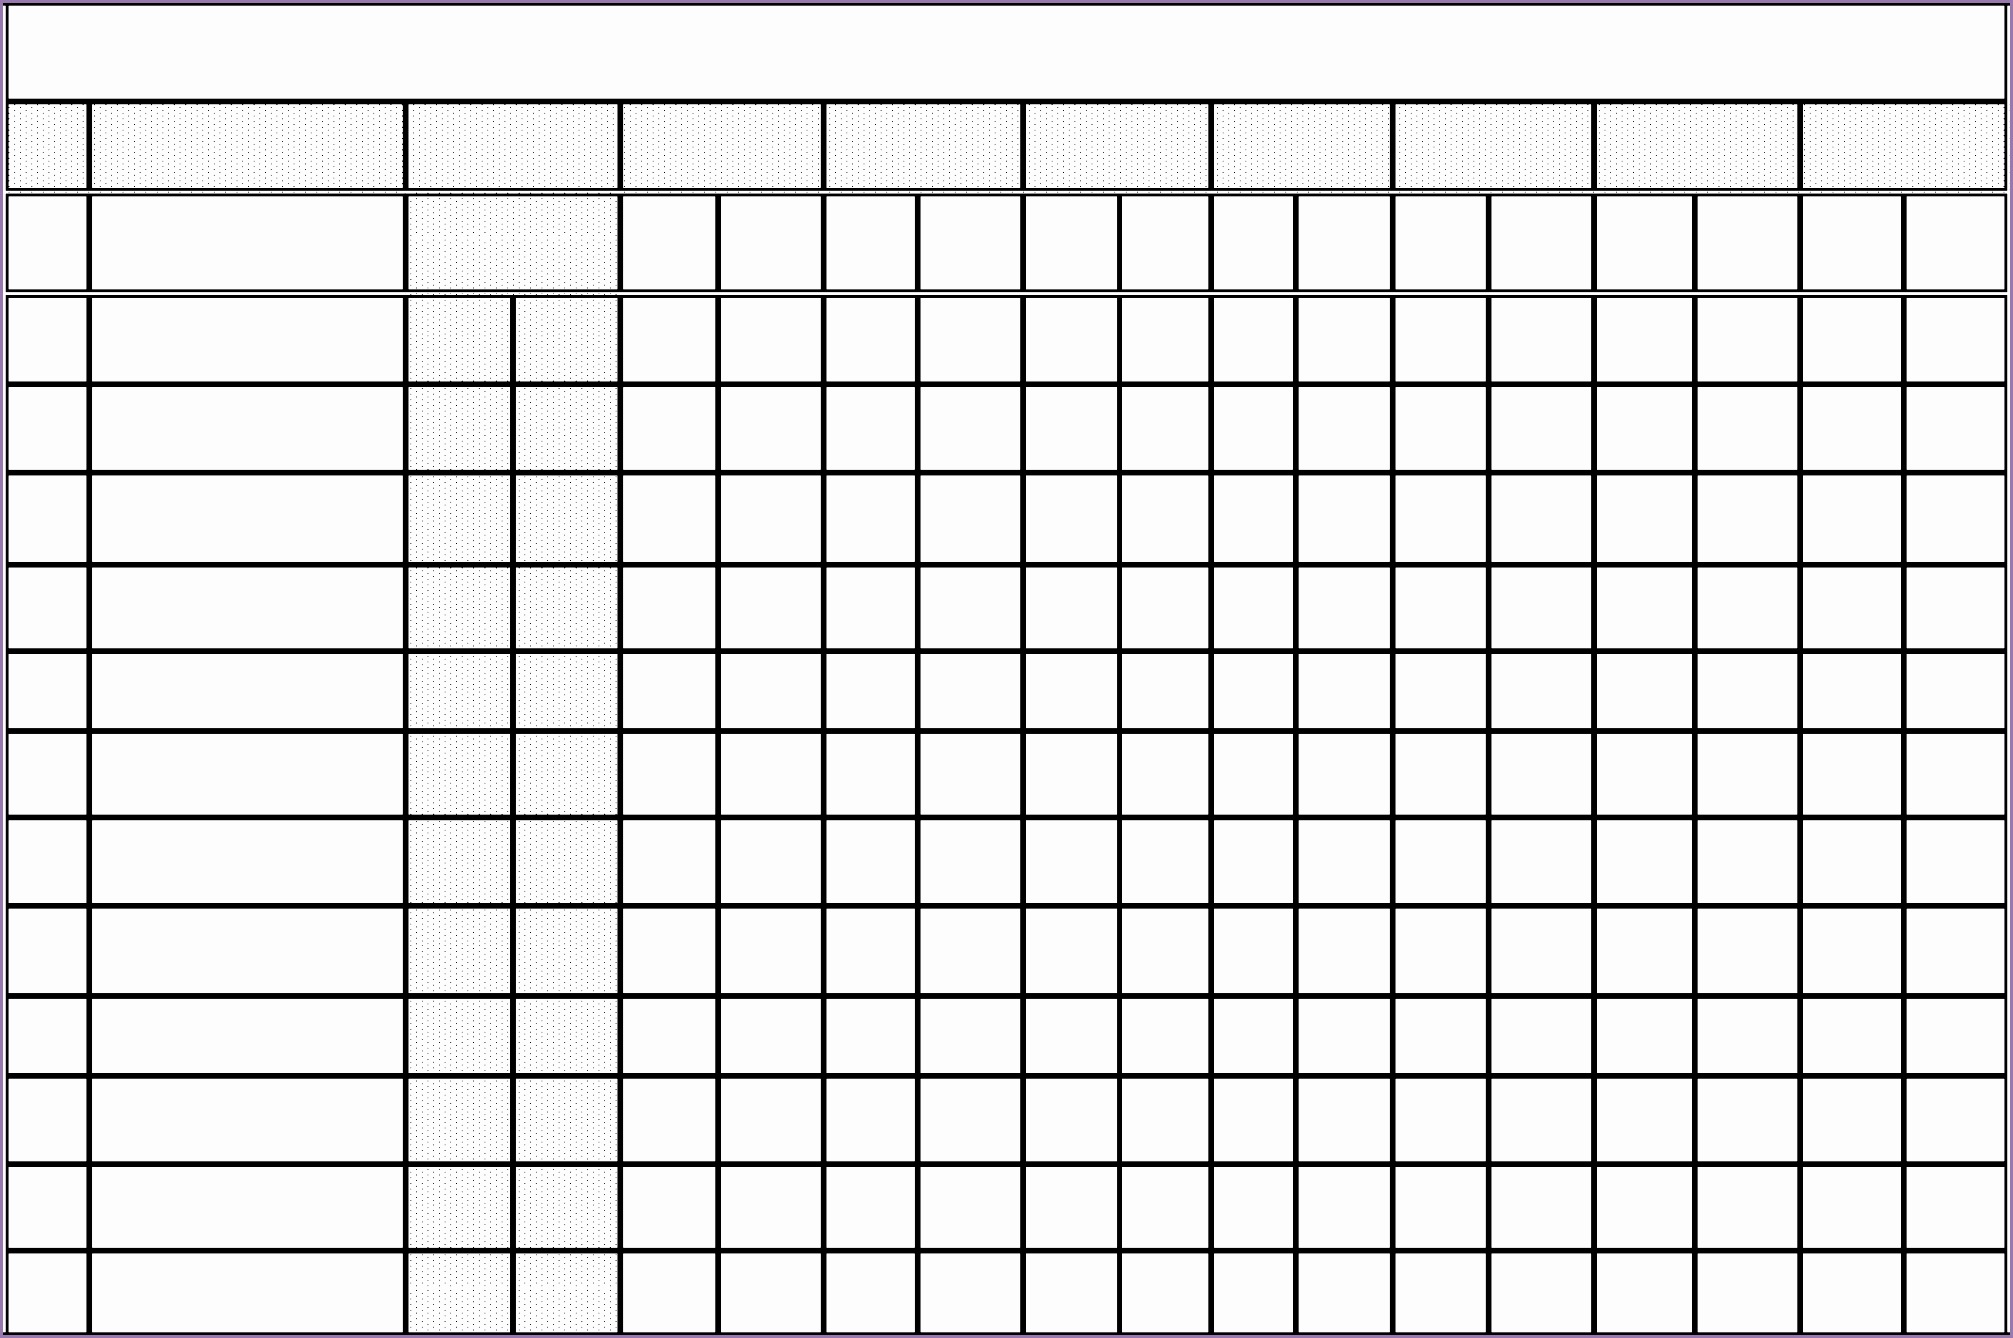 free blank workout chart template